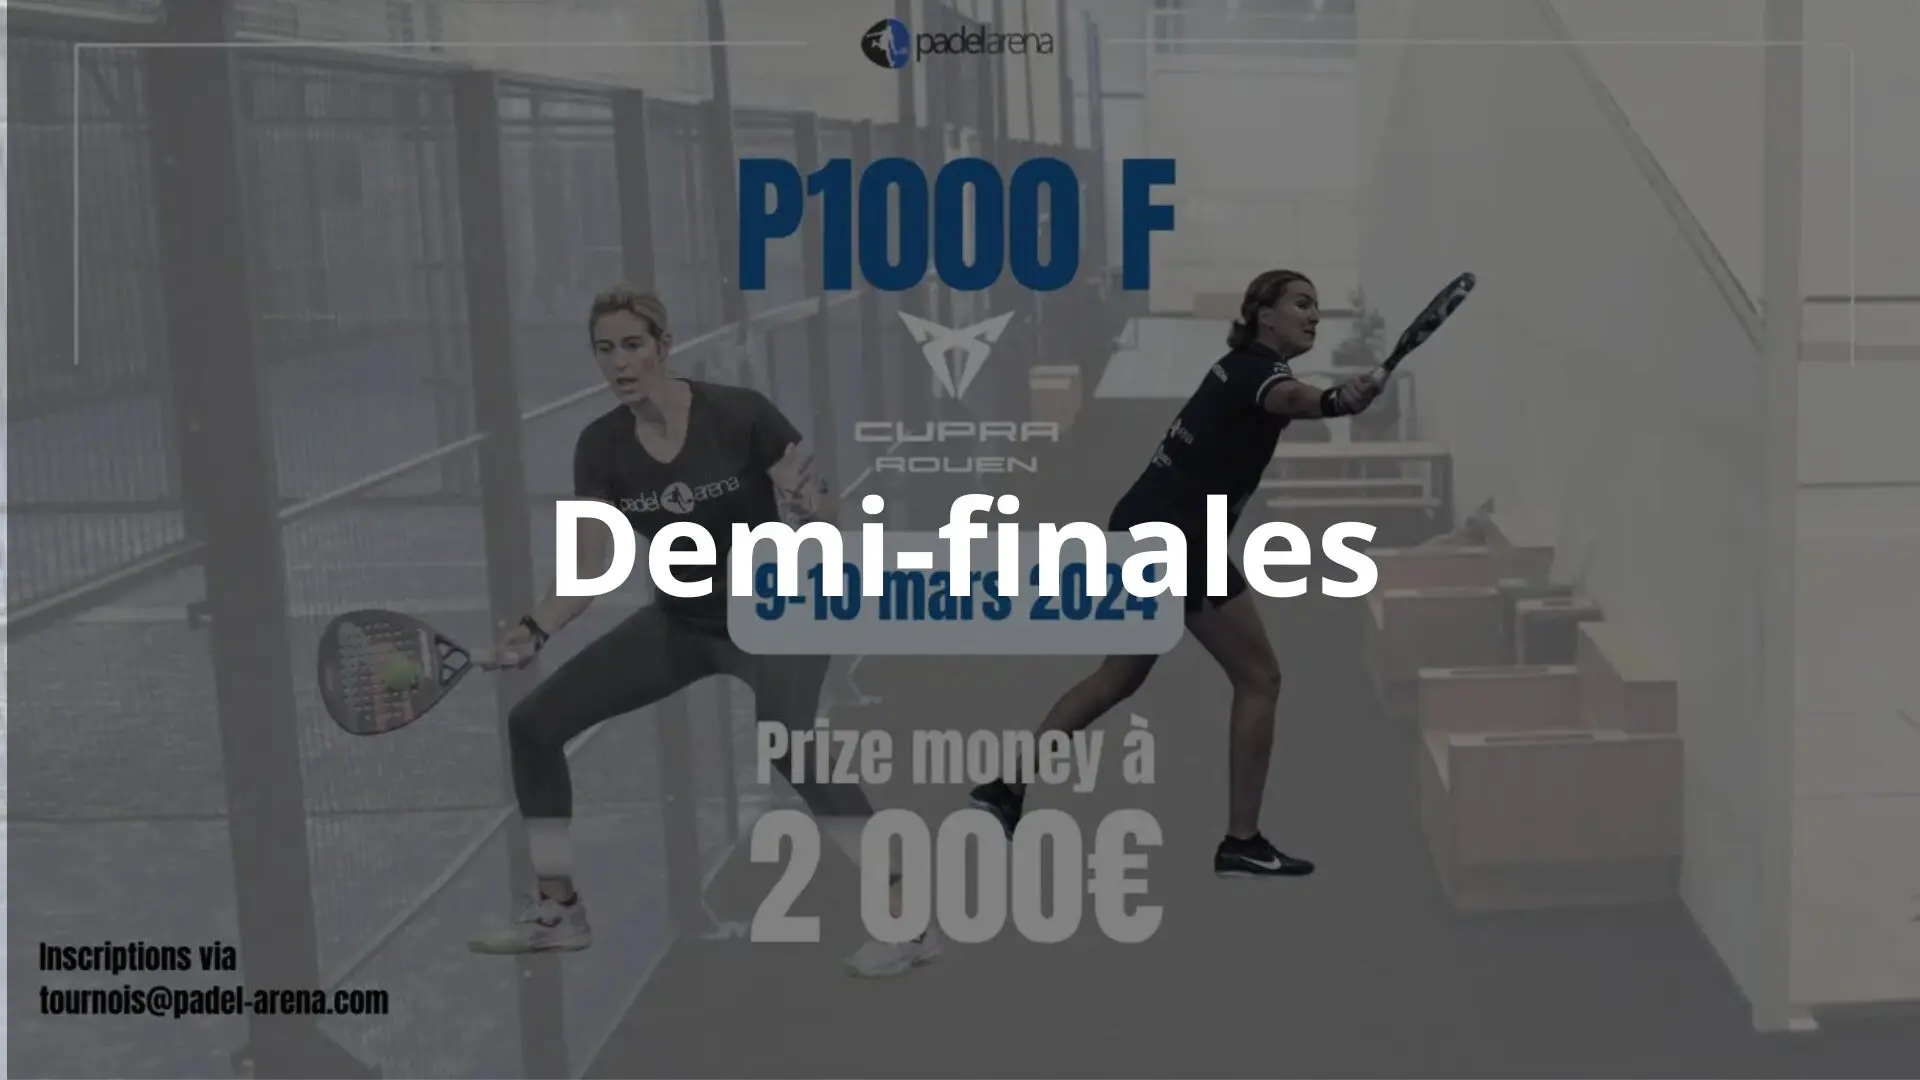 P1000 Padel Arena Cupra Rouen – Start of the semi-finals live!